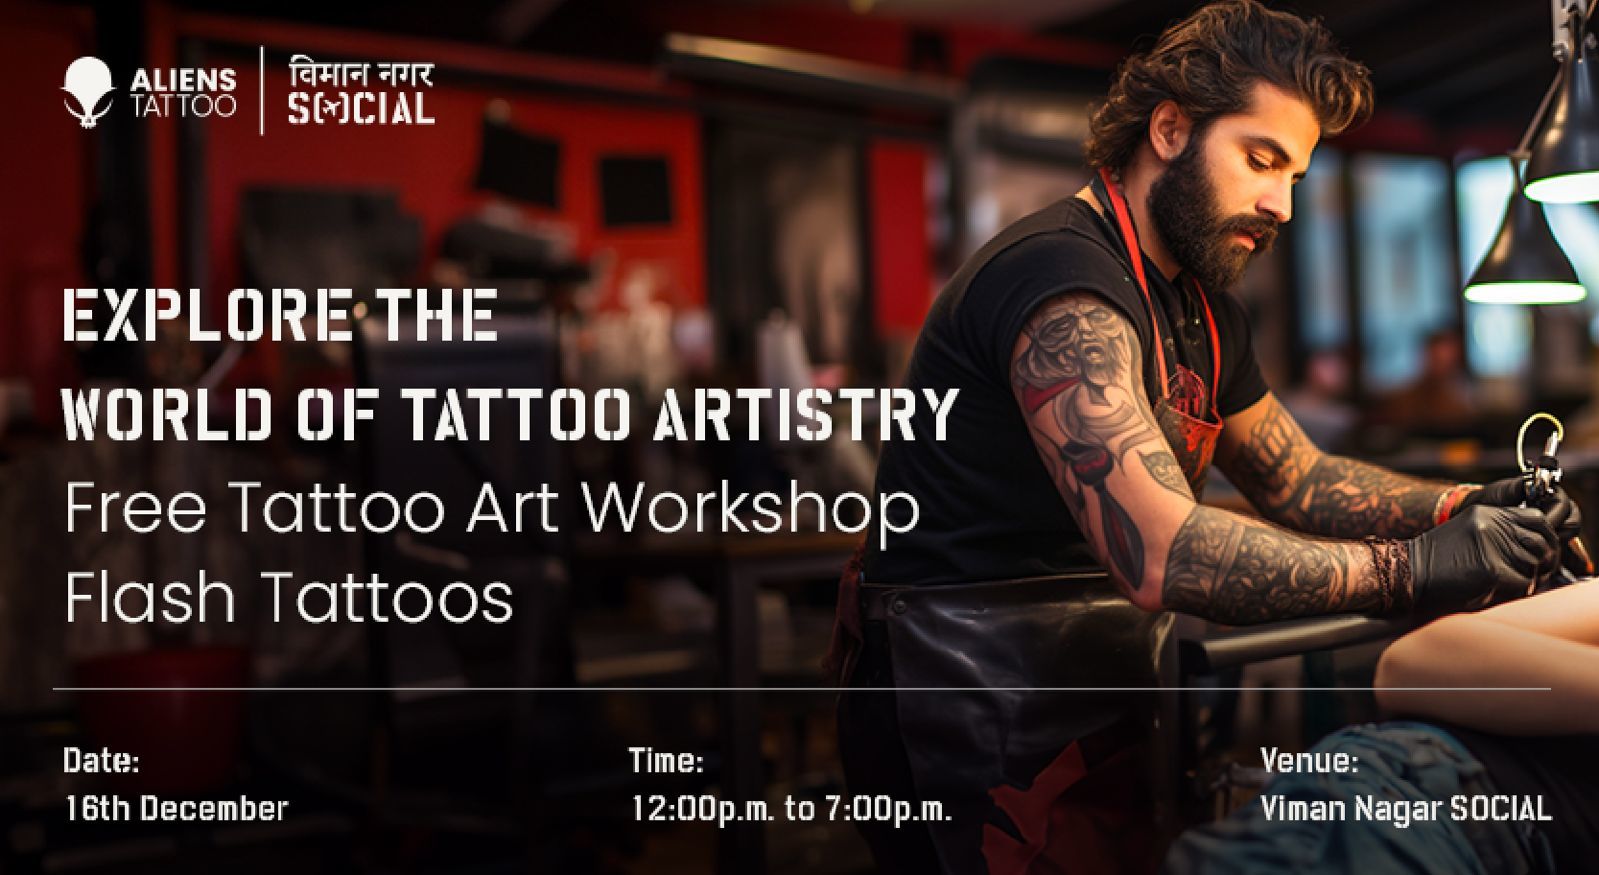 Allan Gois | Lead Tattoo Artist | Aliens Tattoo India / Mumbai | Alien  tattoo, Cover up tattoos for men, Shiva tattoo design